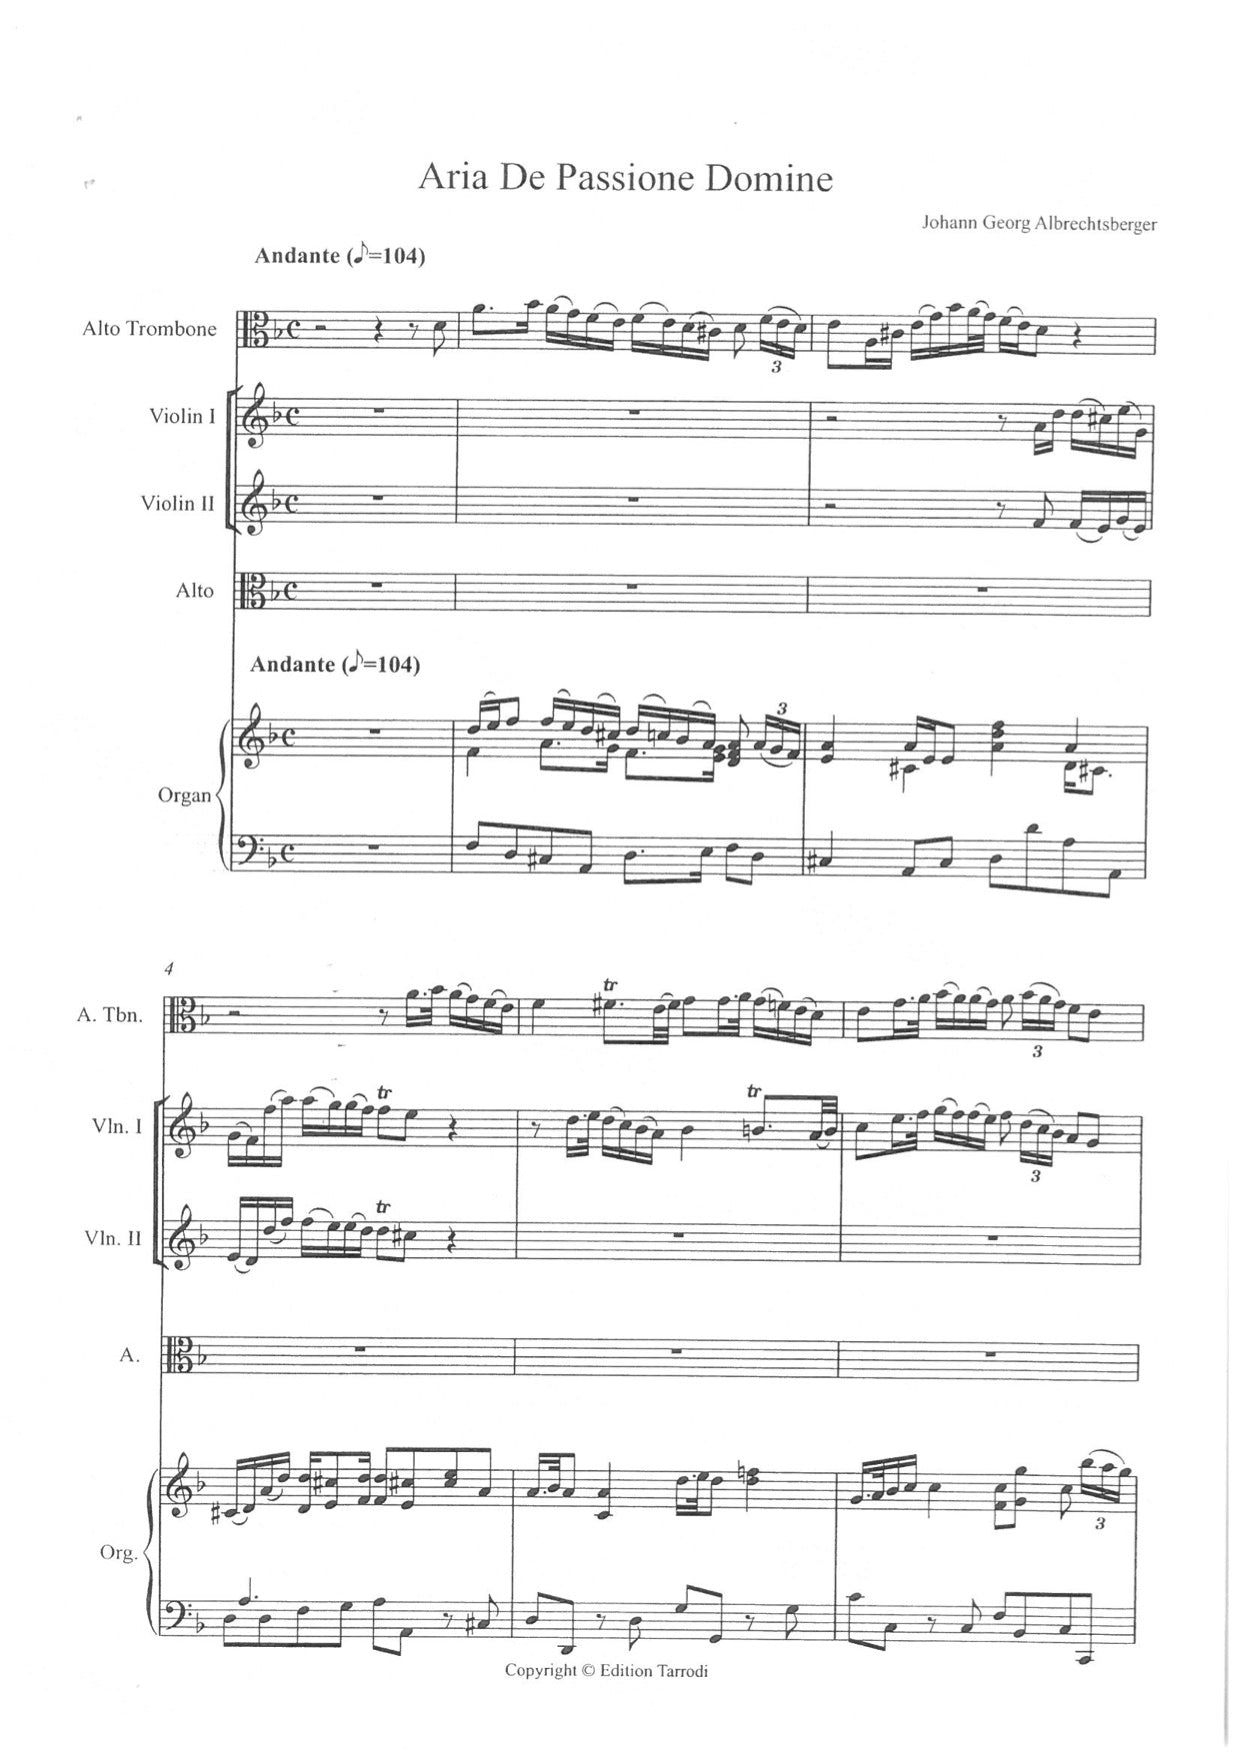 Albrechtberger J.G - Aria de Passione Domine, Alto trombone, voice, strings  & Organ